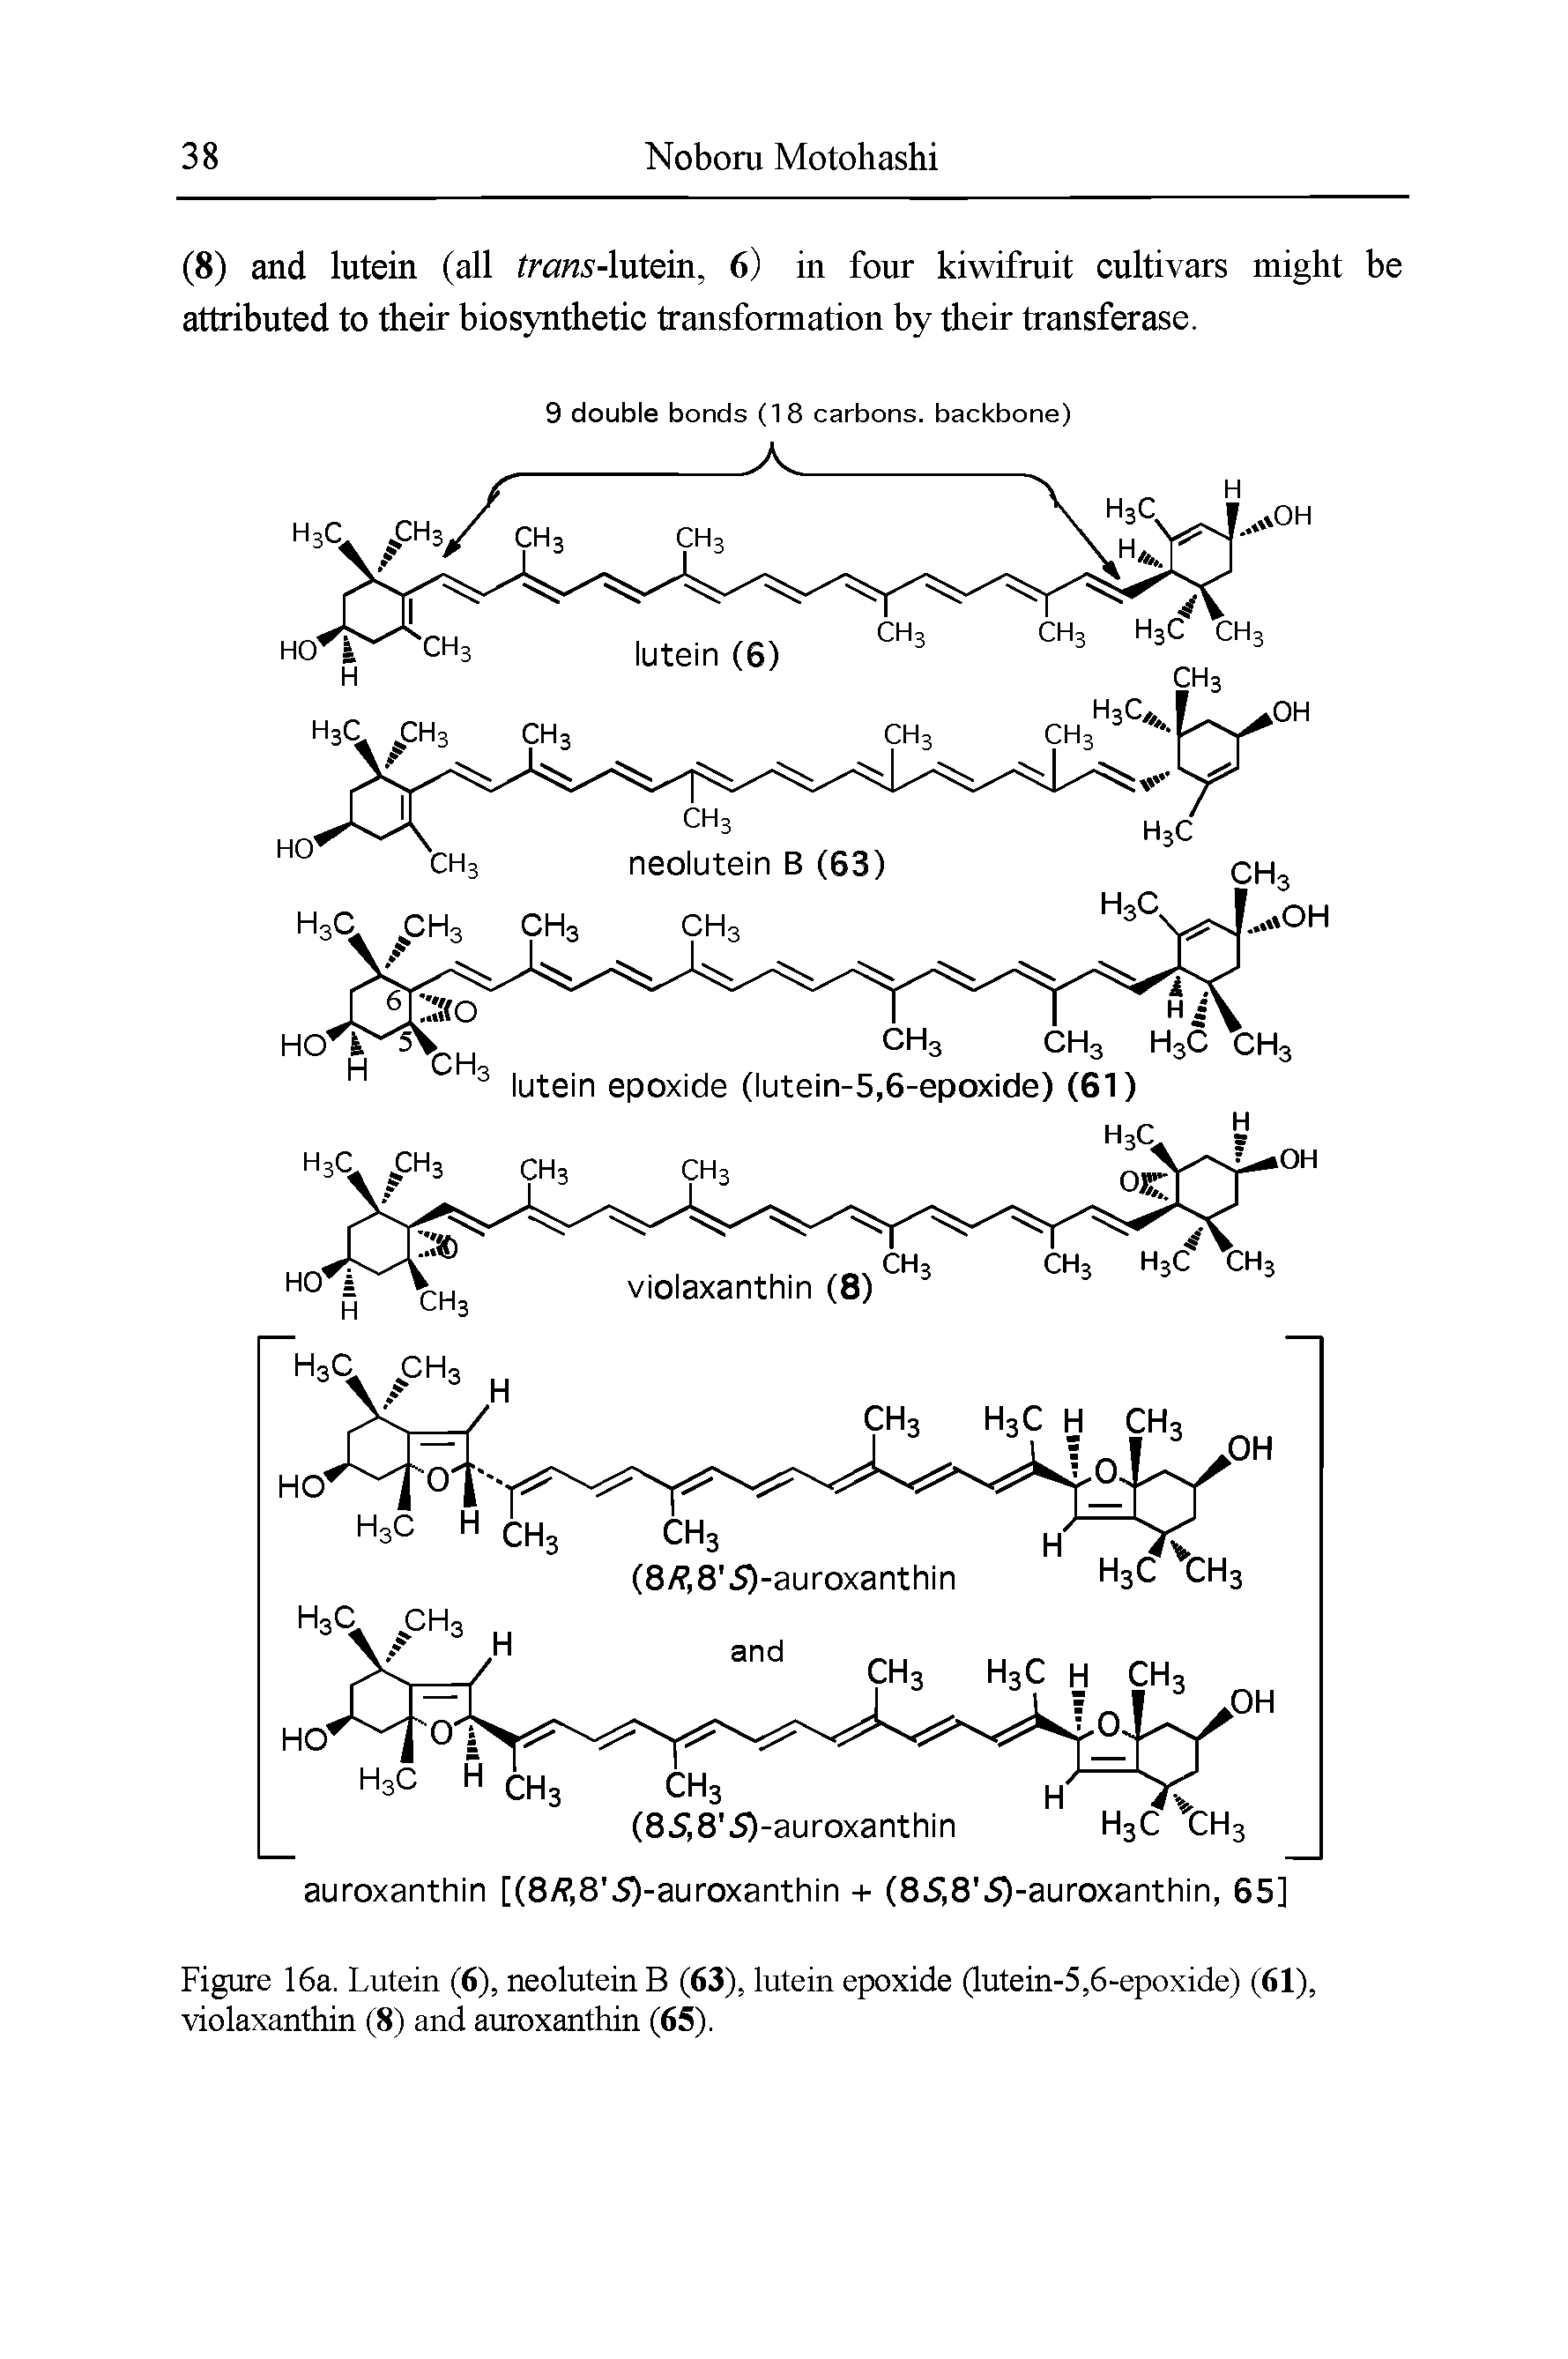 Figure 16a. Lutein (6), neolutein B (63), lutein epoxide (lutein-5,6-epoxide) (61), violaxanthin (8) and auroxanthin (65).